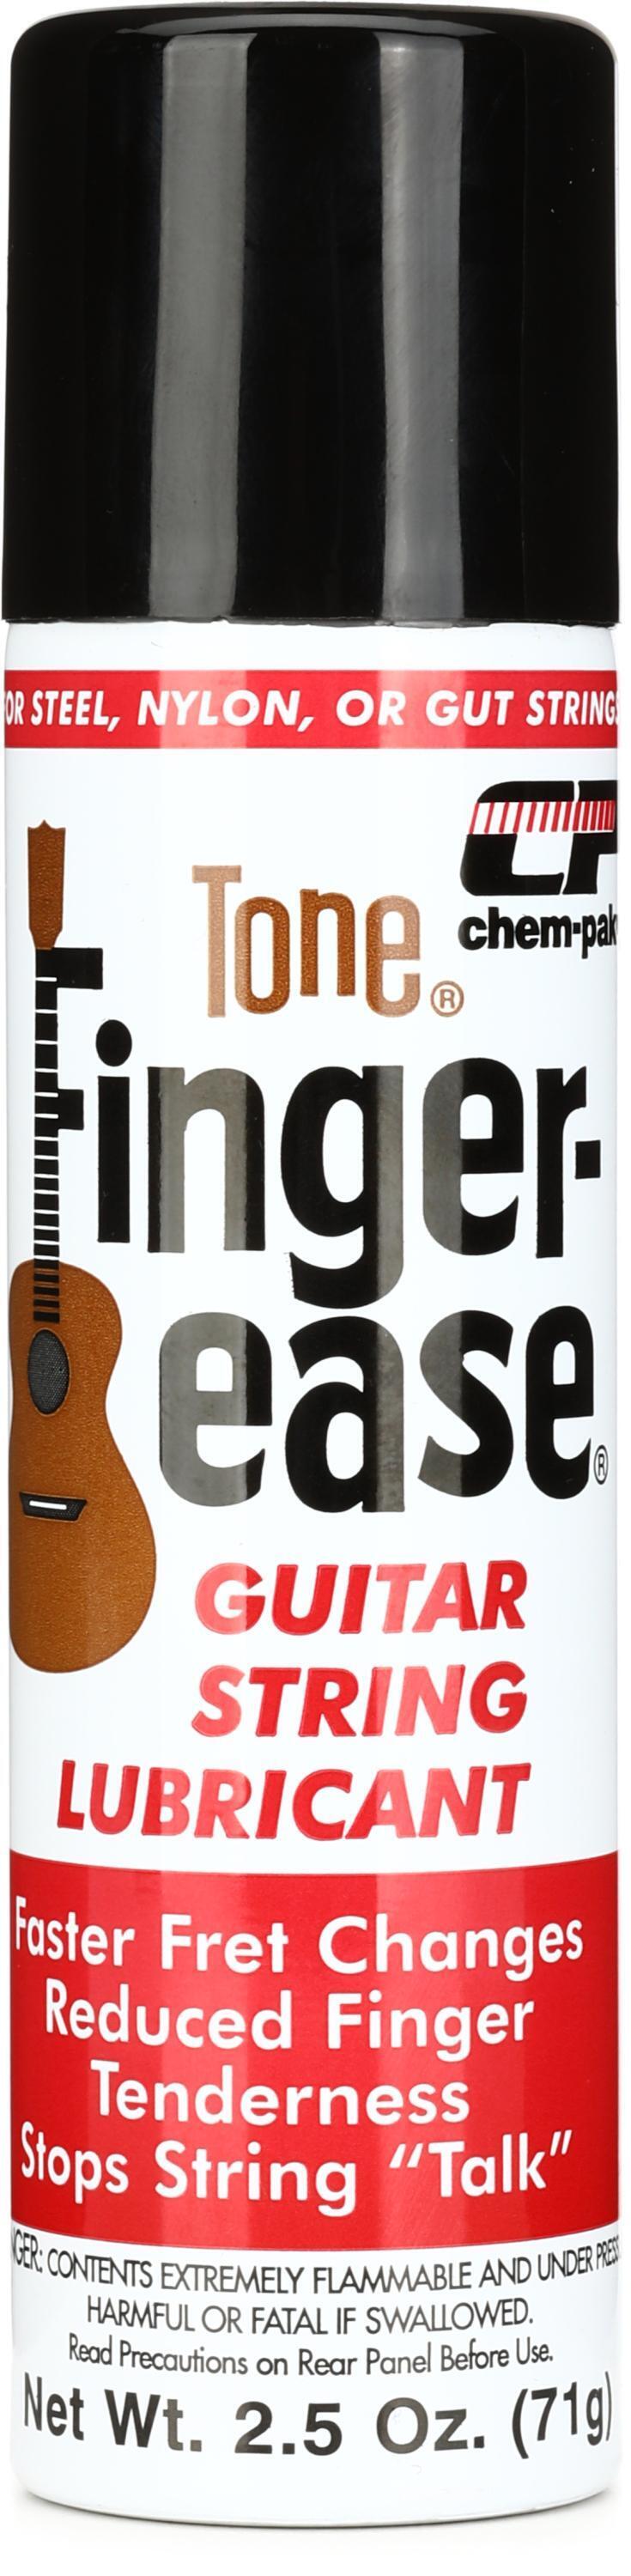 Tone Finger Ease Guitar String Lubricant for sale online